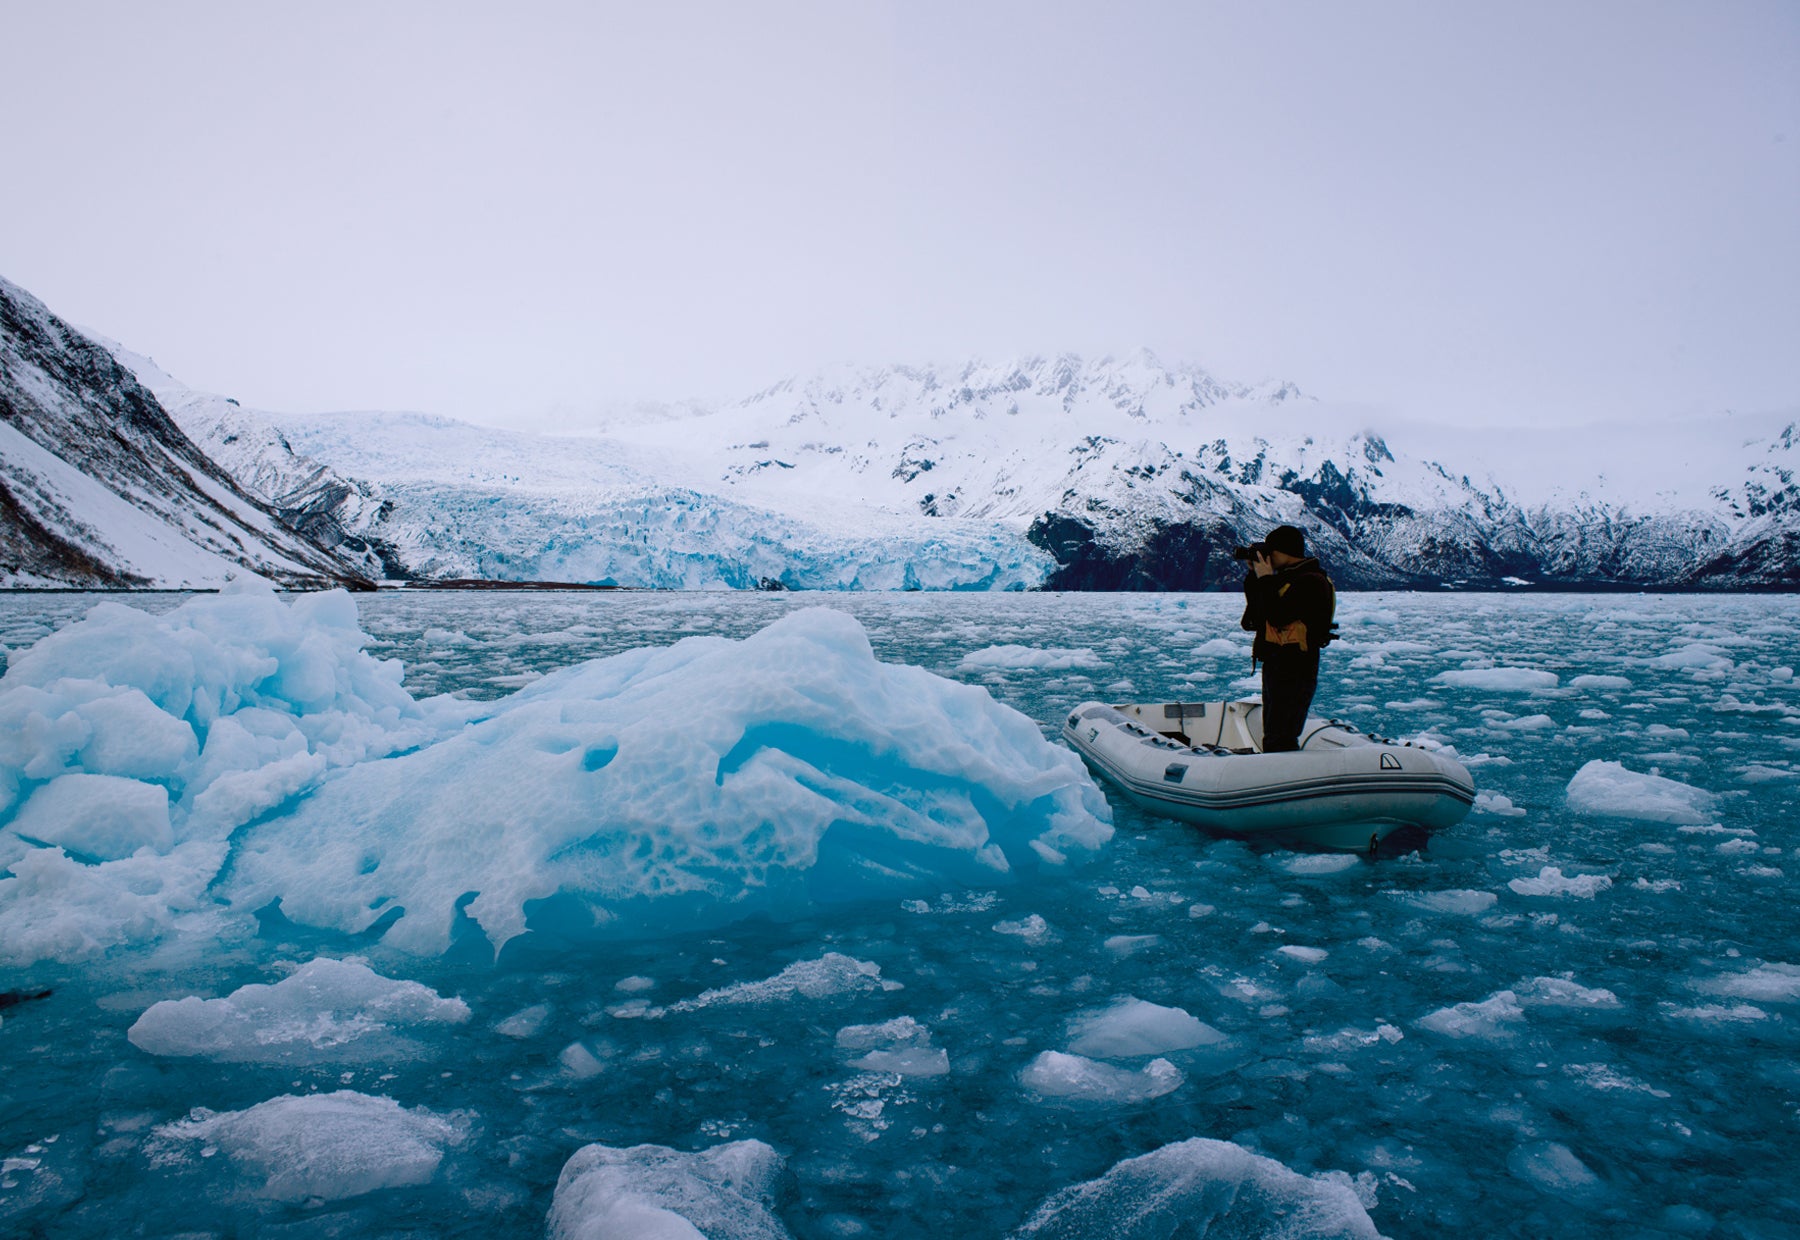 Portrait of Peter Lik standing in a Zodiac inflatable boat in an ocean of broken ice off the coast of Alaska